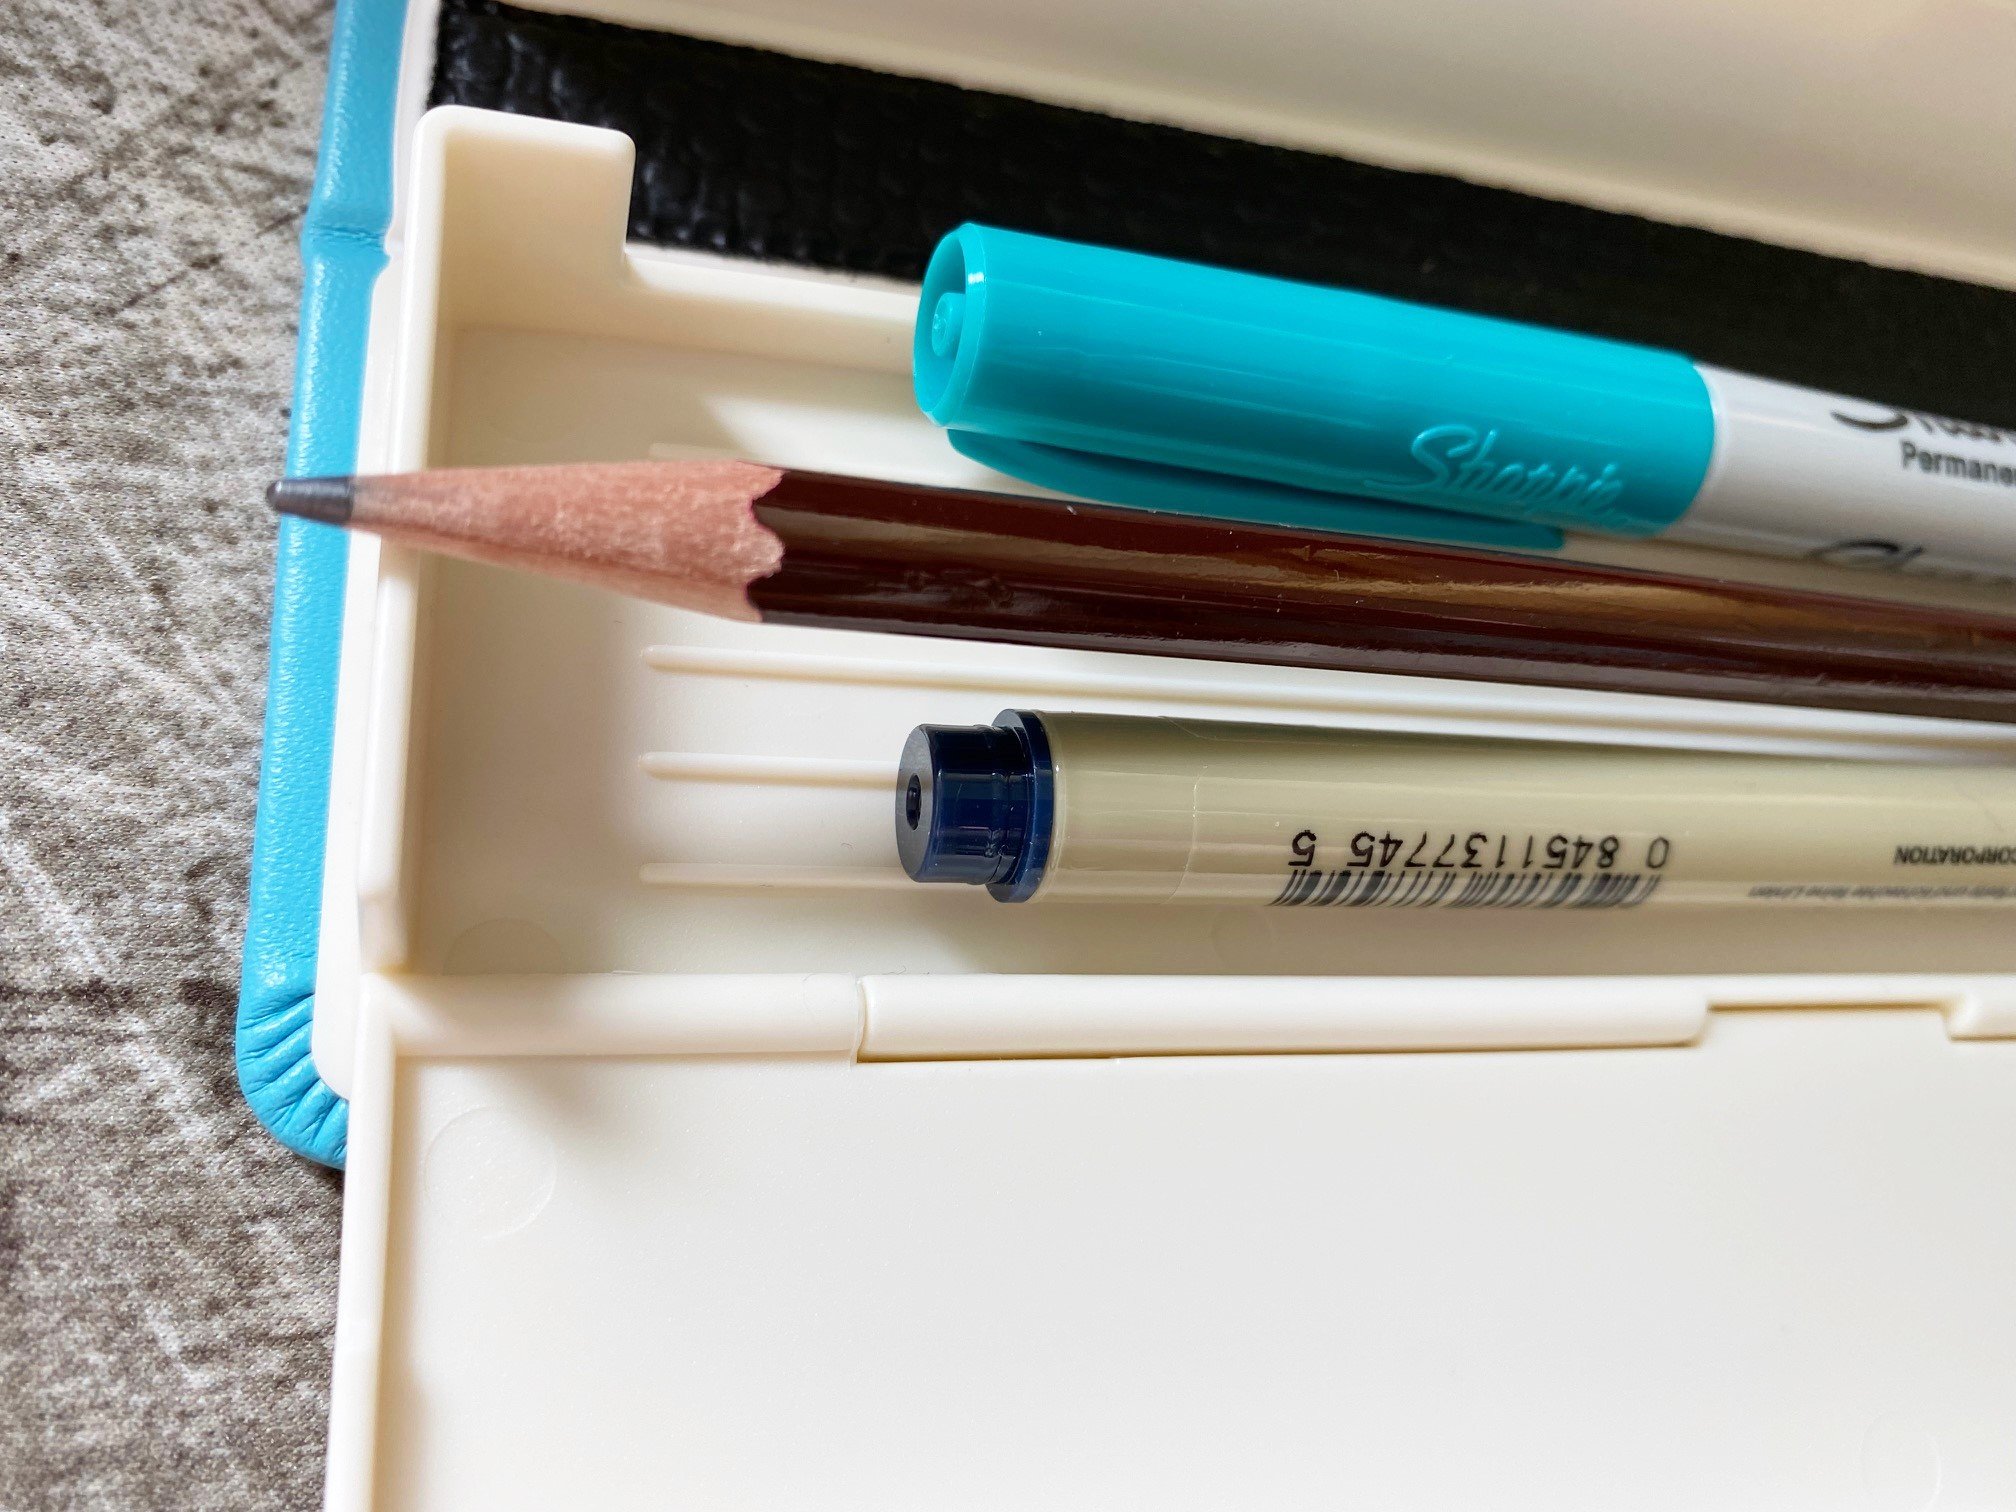 inexPENsive - Pilot Sign pen, The Pencilcase Blog